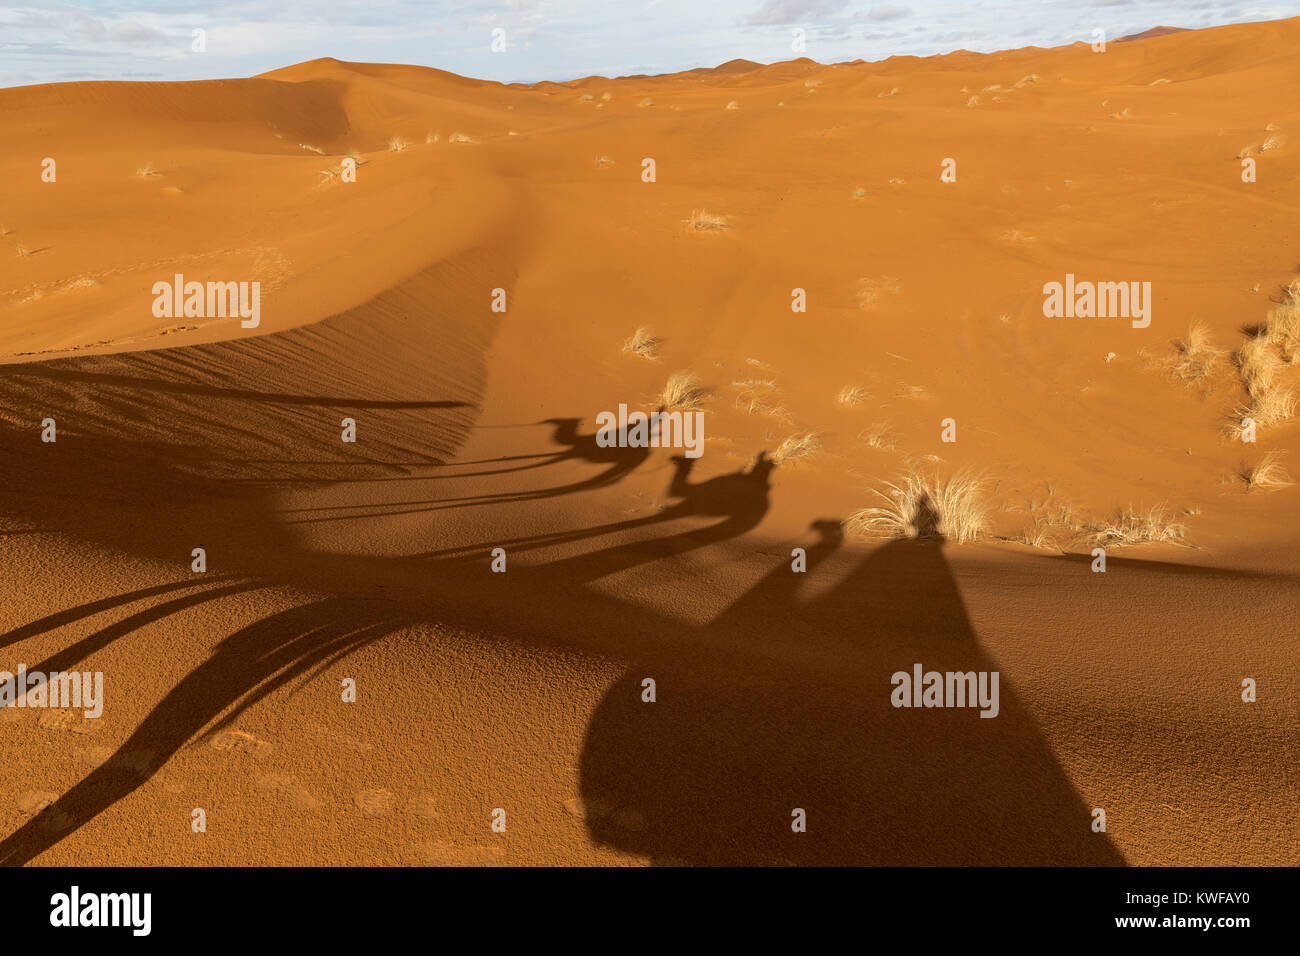 Camel shadows cast upon sand dunes during camel trek in Moroccan Sahara desert. Stock Photo